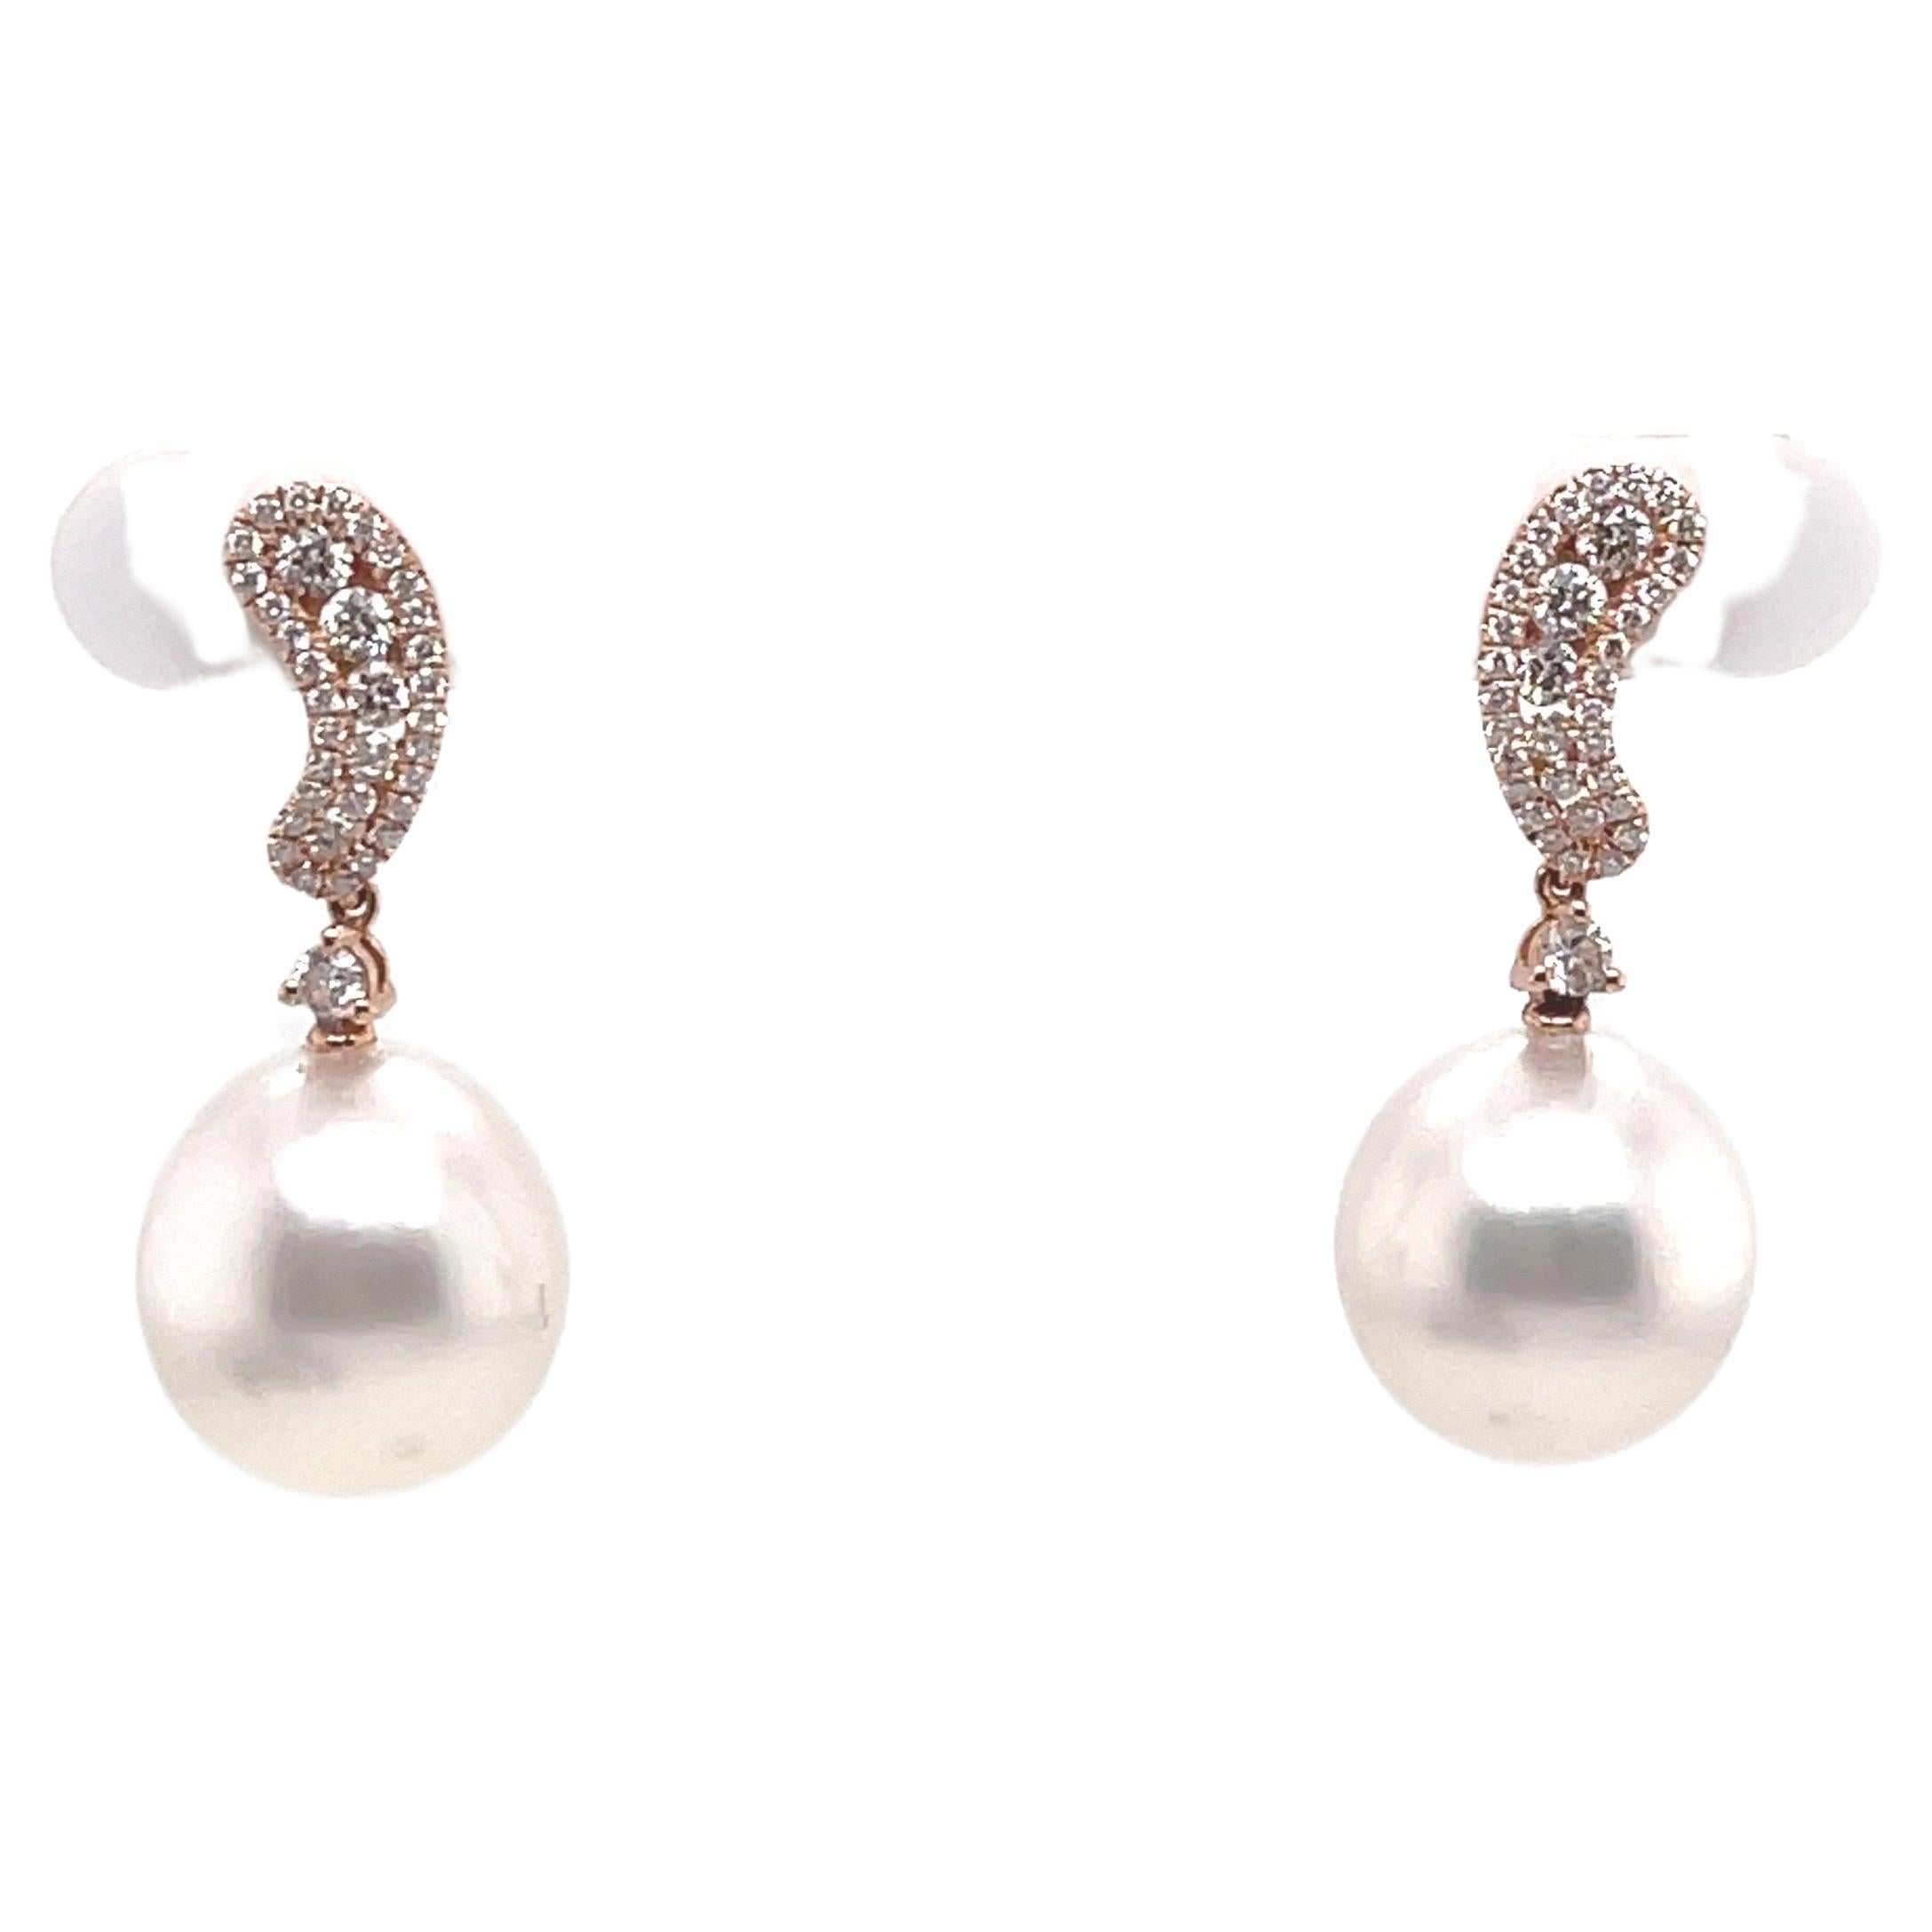 Boucles d'oreilles pendantes en or rose 18 carats comprenant deux perles des mers du Sud mesurant 12-13 mm avec 8 brillants ronds, 0,31 carats et 62 diamants plus petits pesant 0,29 carats. 